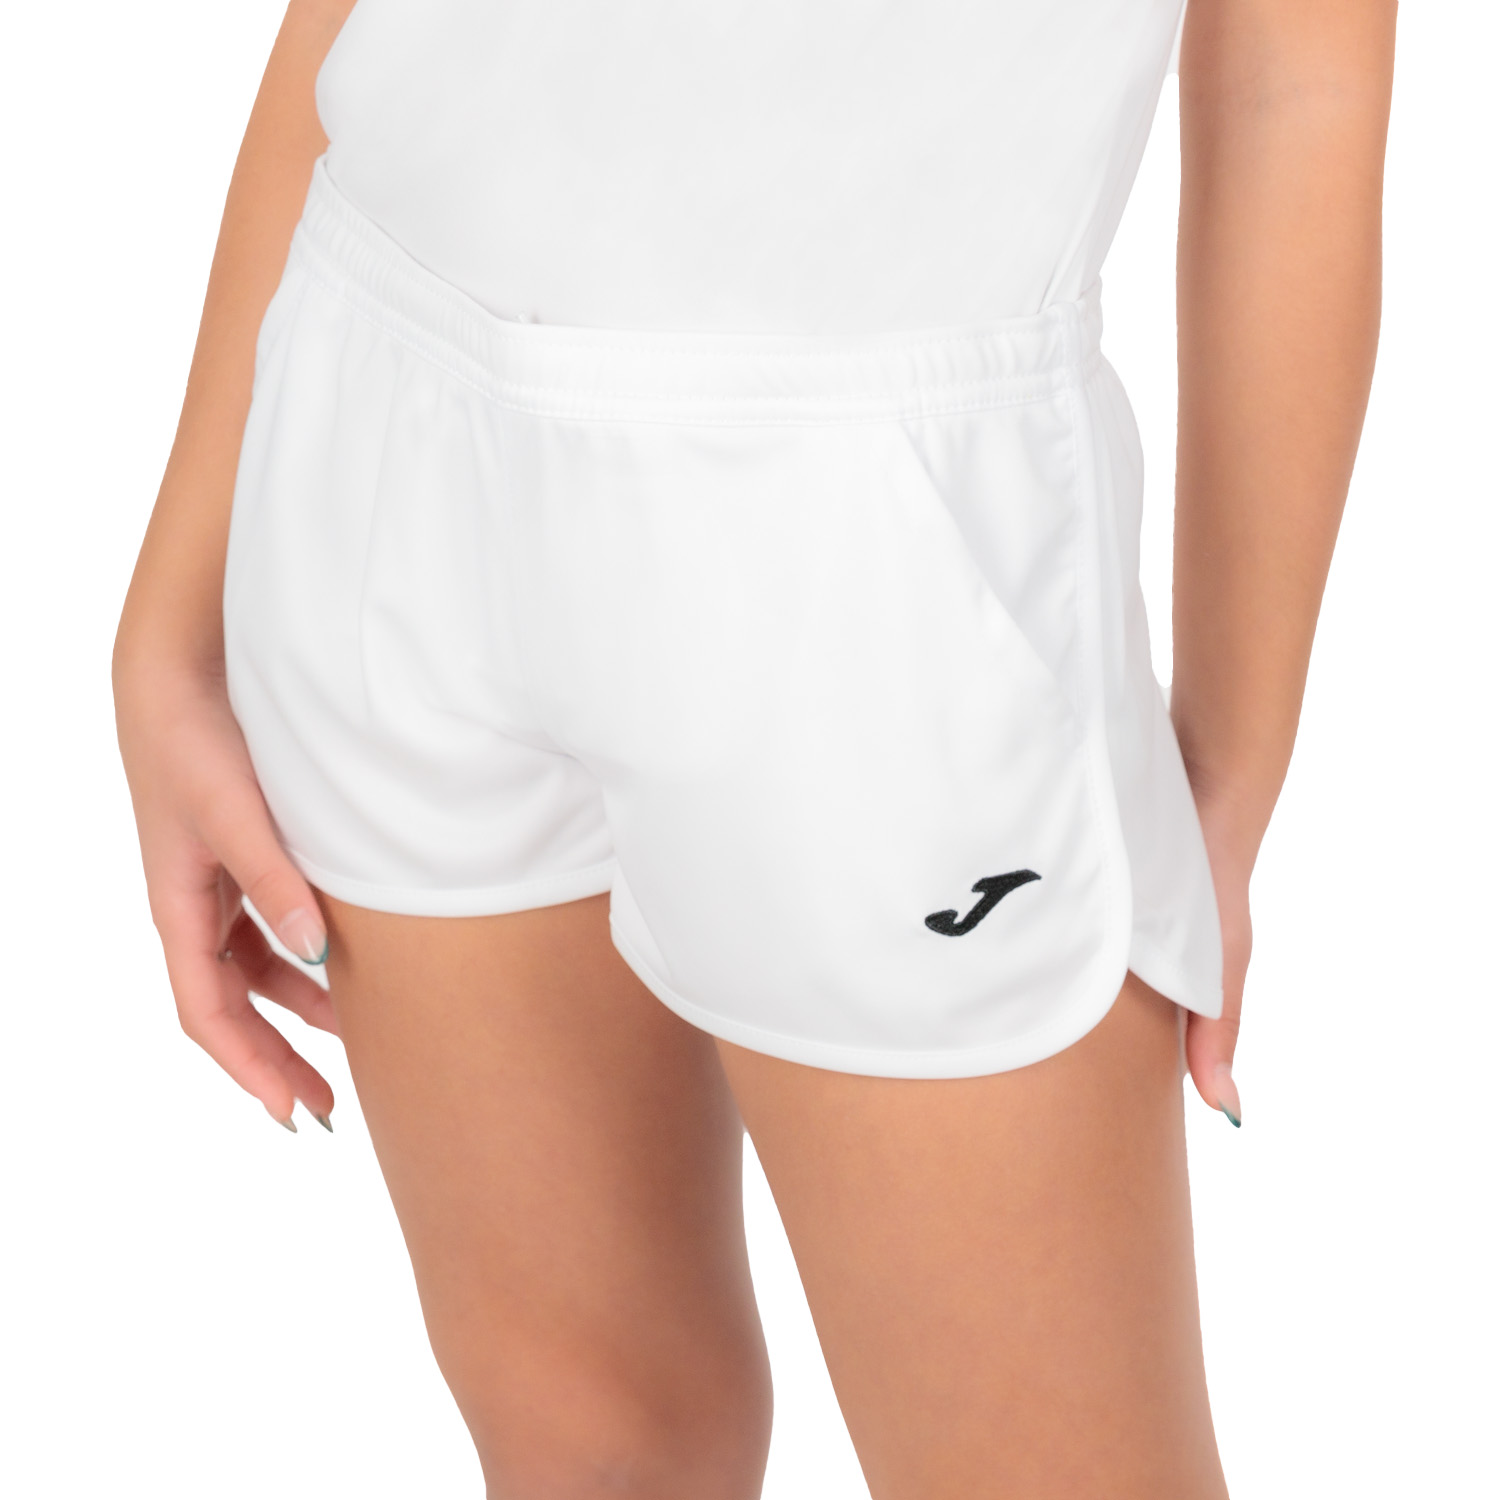 Joma Girl Hobby 2in Shorts - White